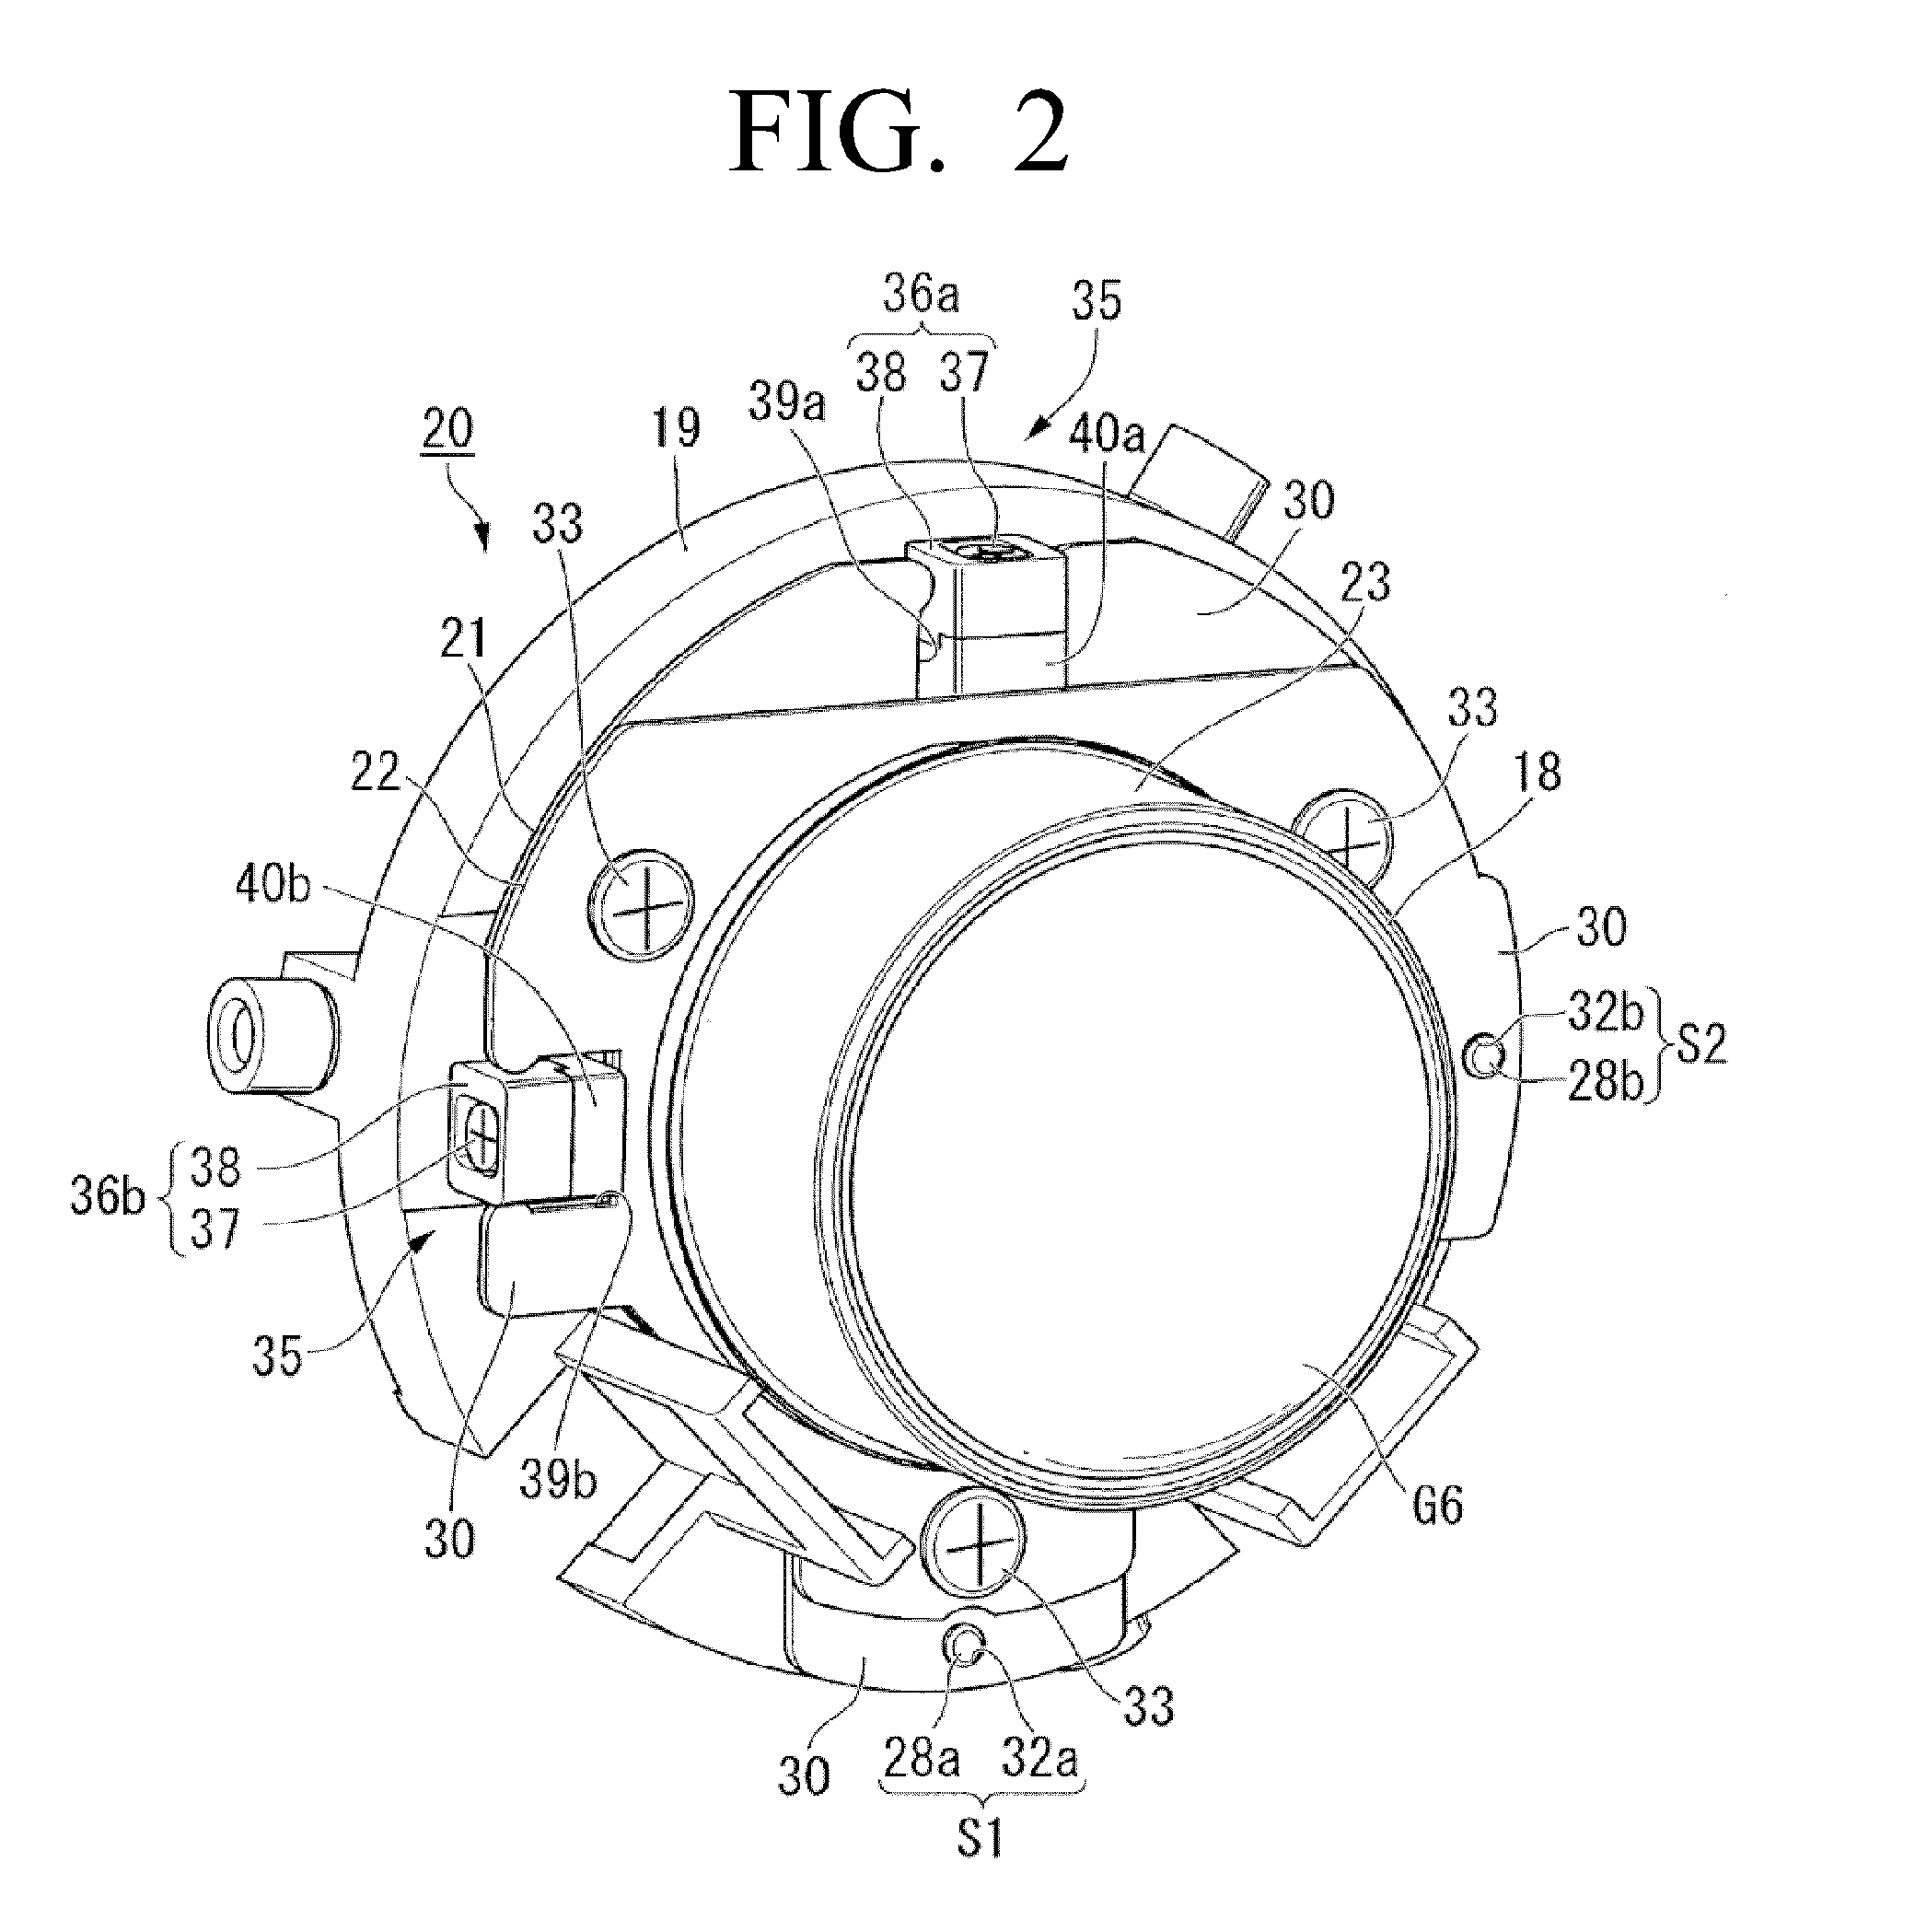 Adjustment device, lens barrel, and optical apparatus